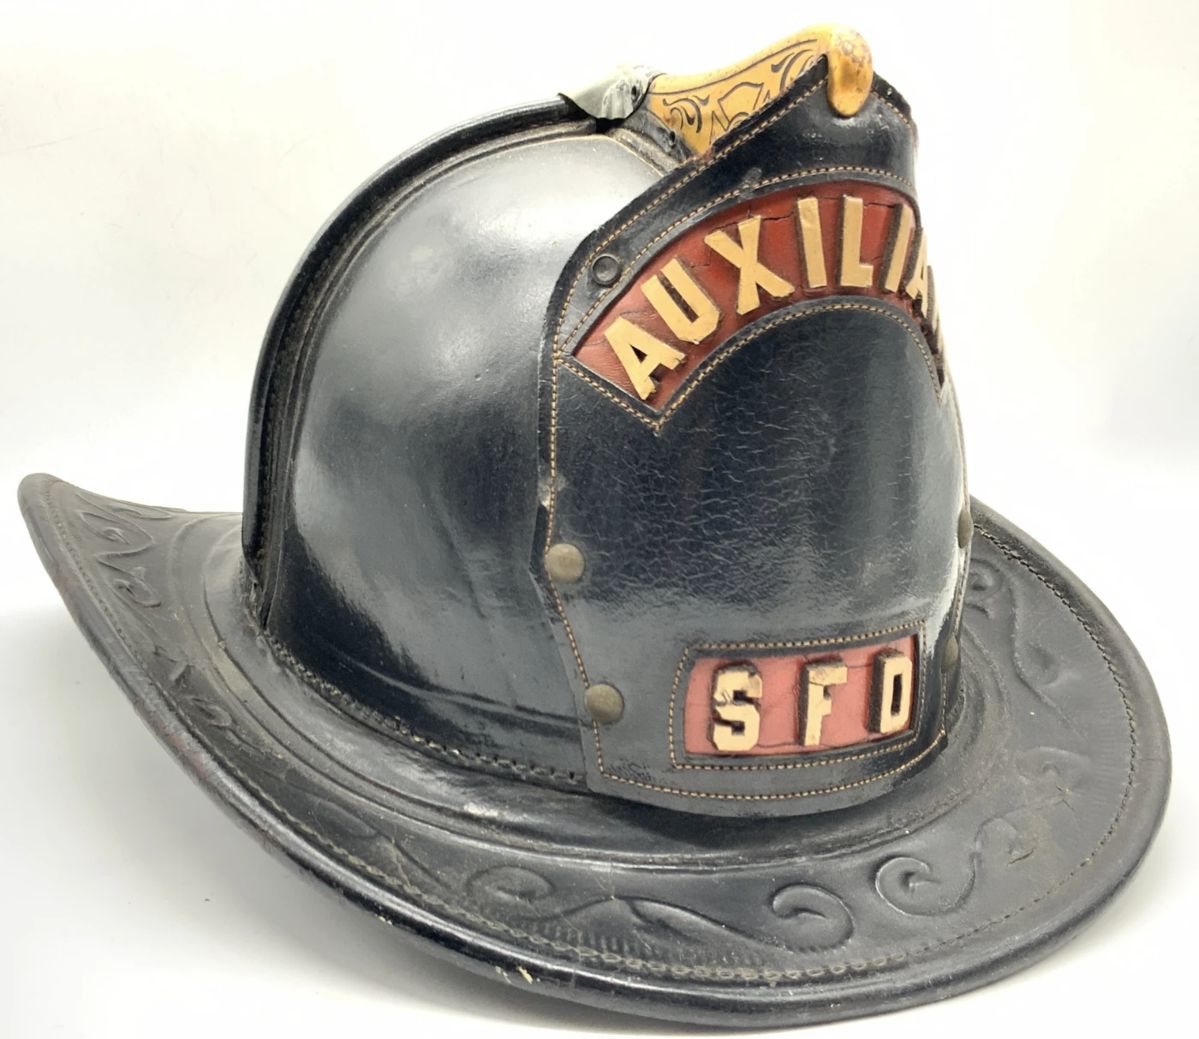 20th Century SFD FD Auxiliary FireFighter Helmet
